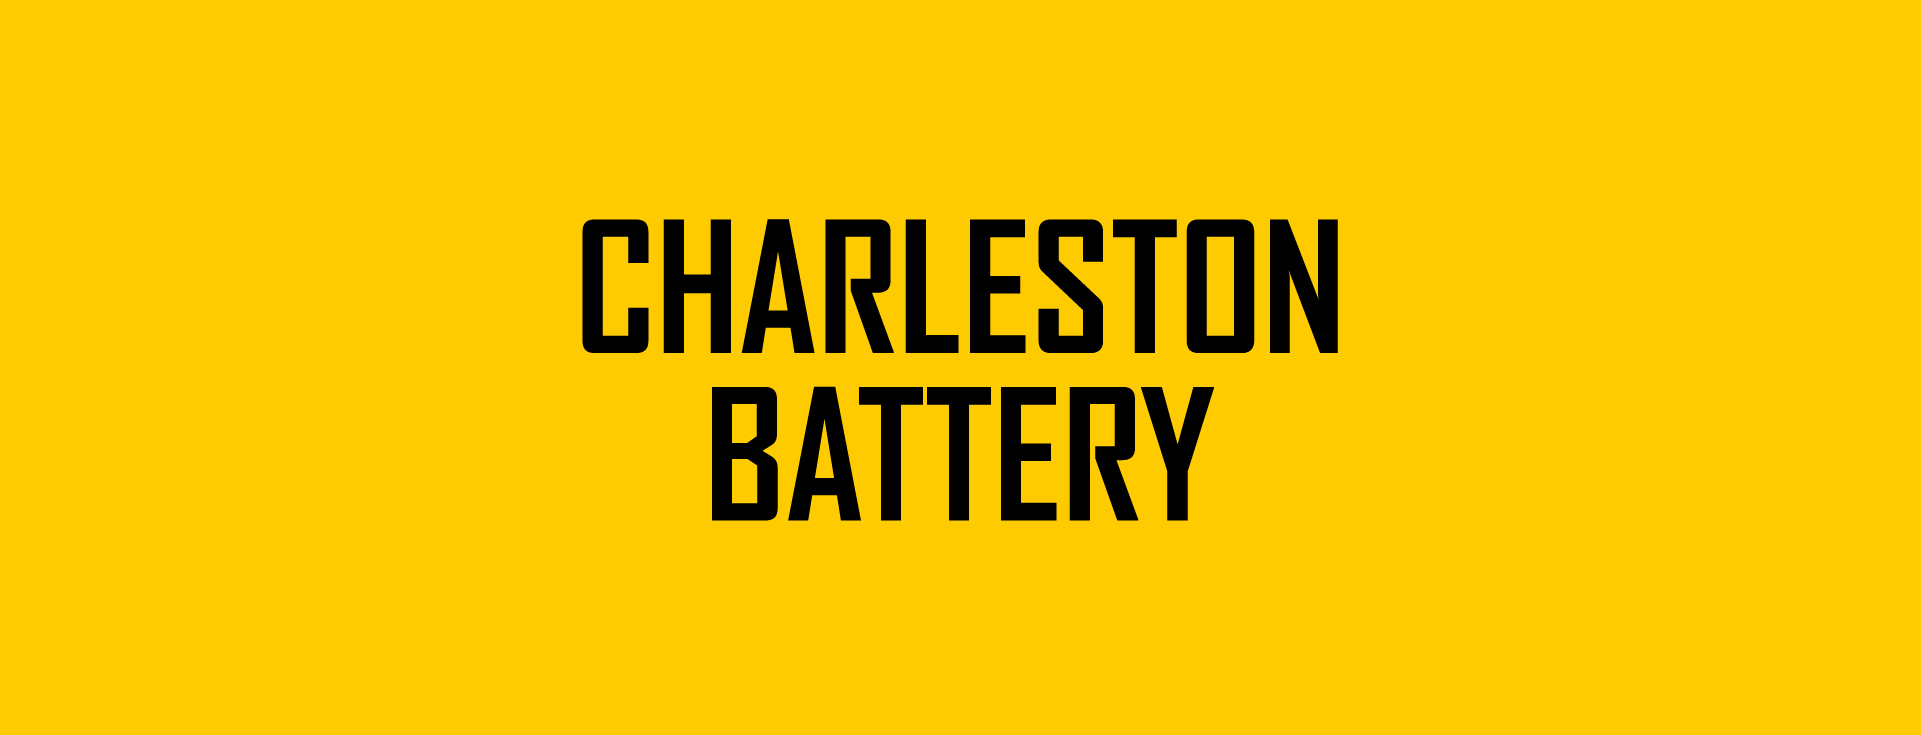 CharlestonBattery_MatthewWolff_Wordmark_1